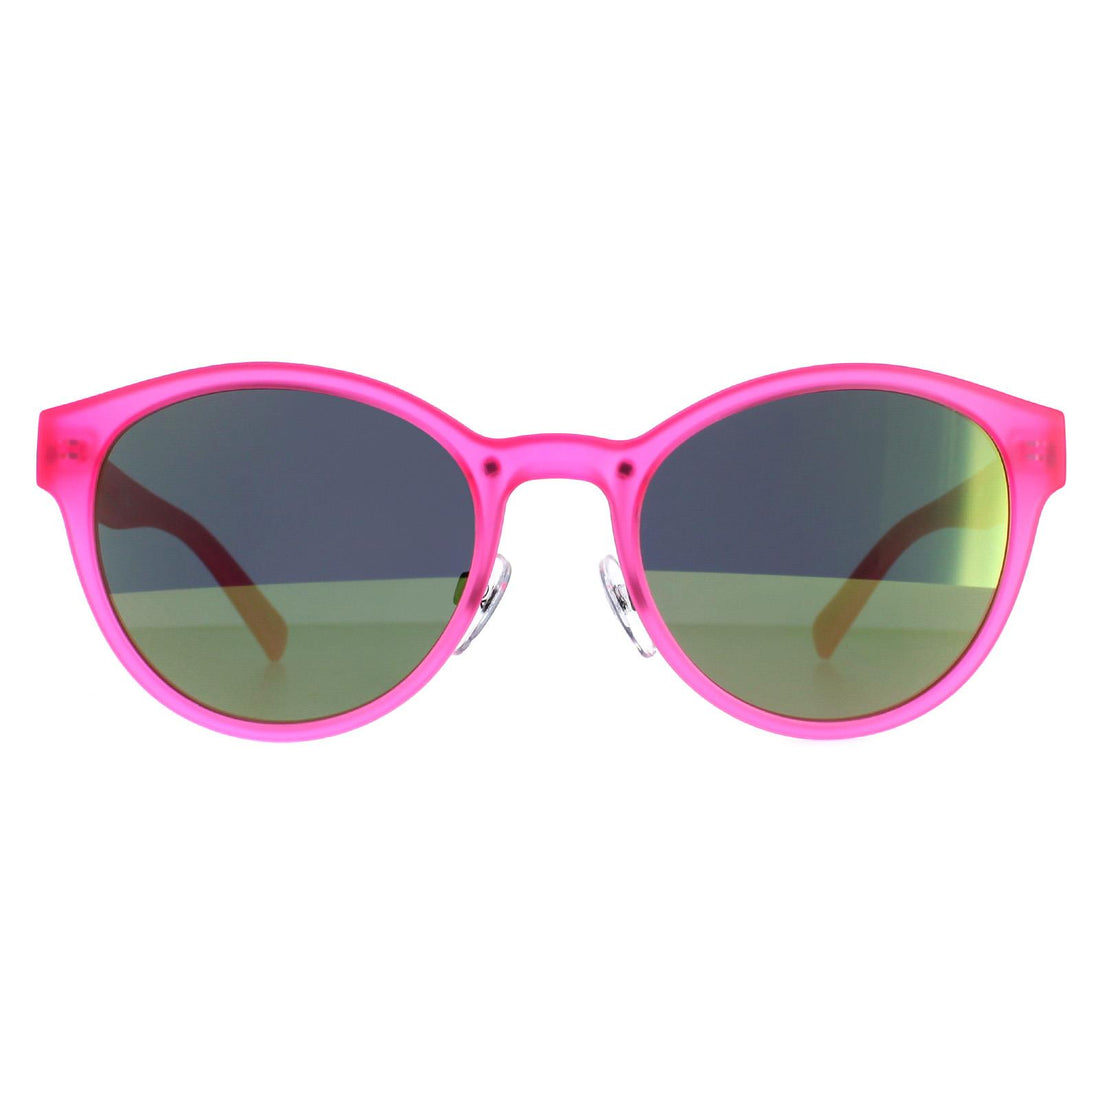 Benetton BE5009 Sunglasses Rose / Rose Mirrored